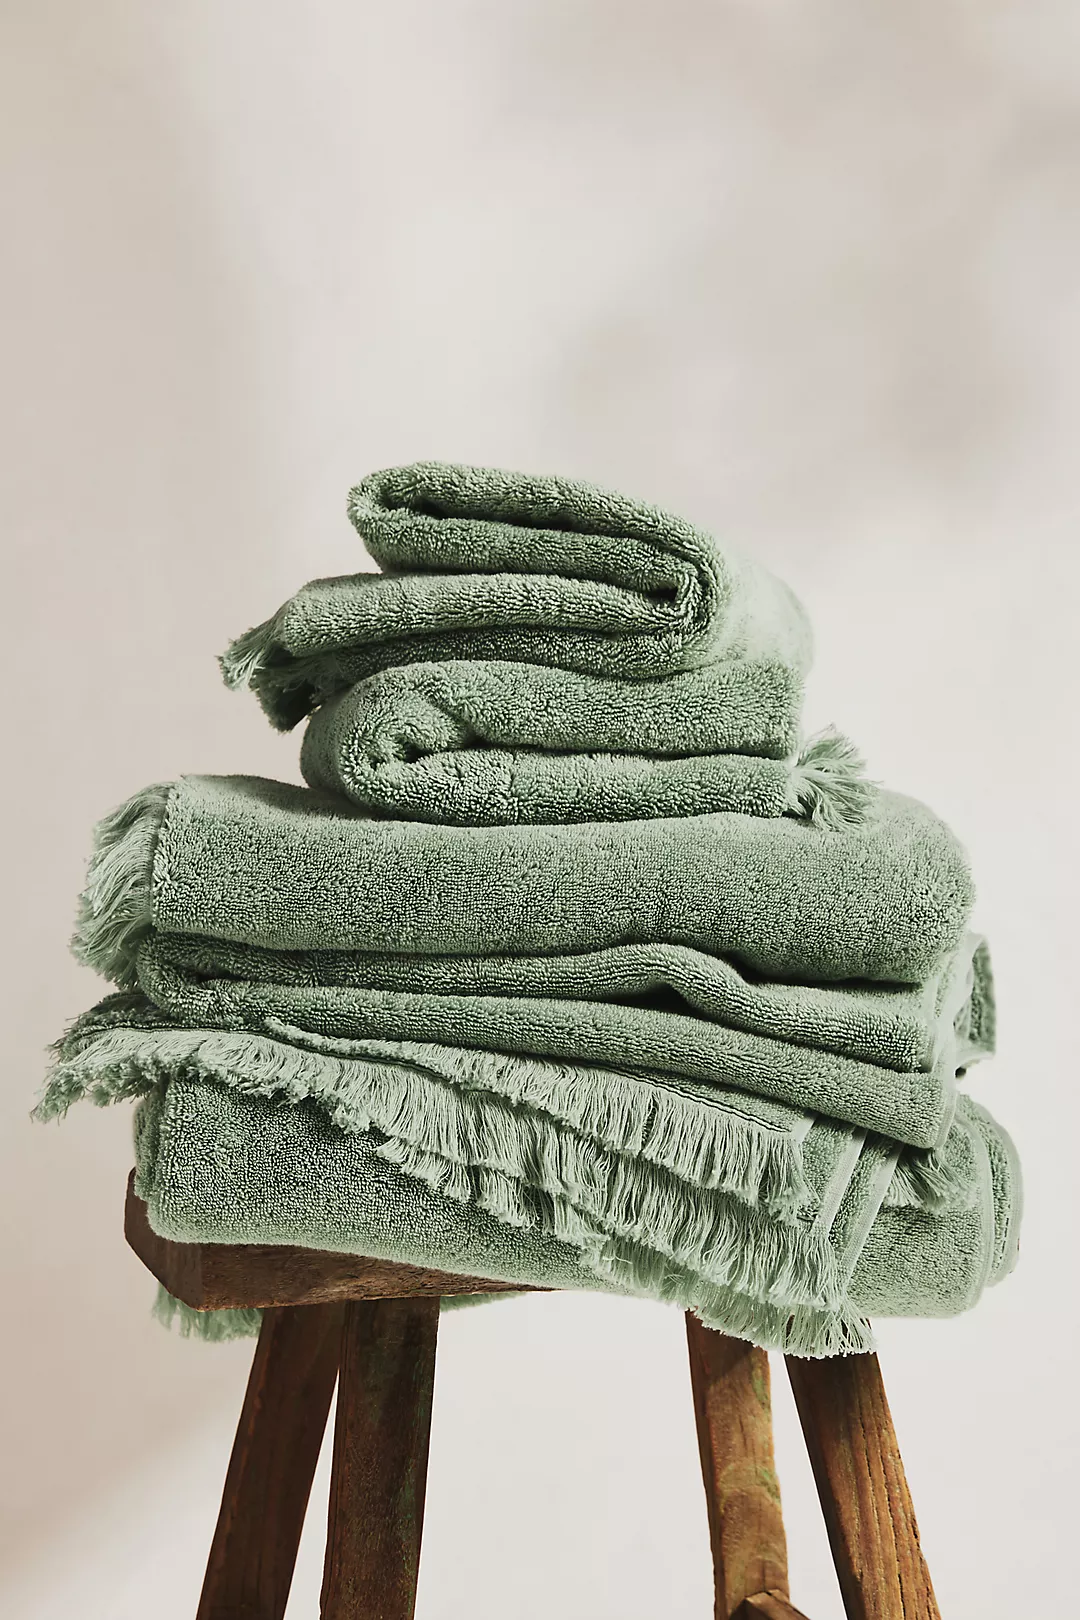 green bath towels folded on stool